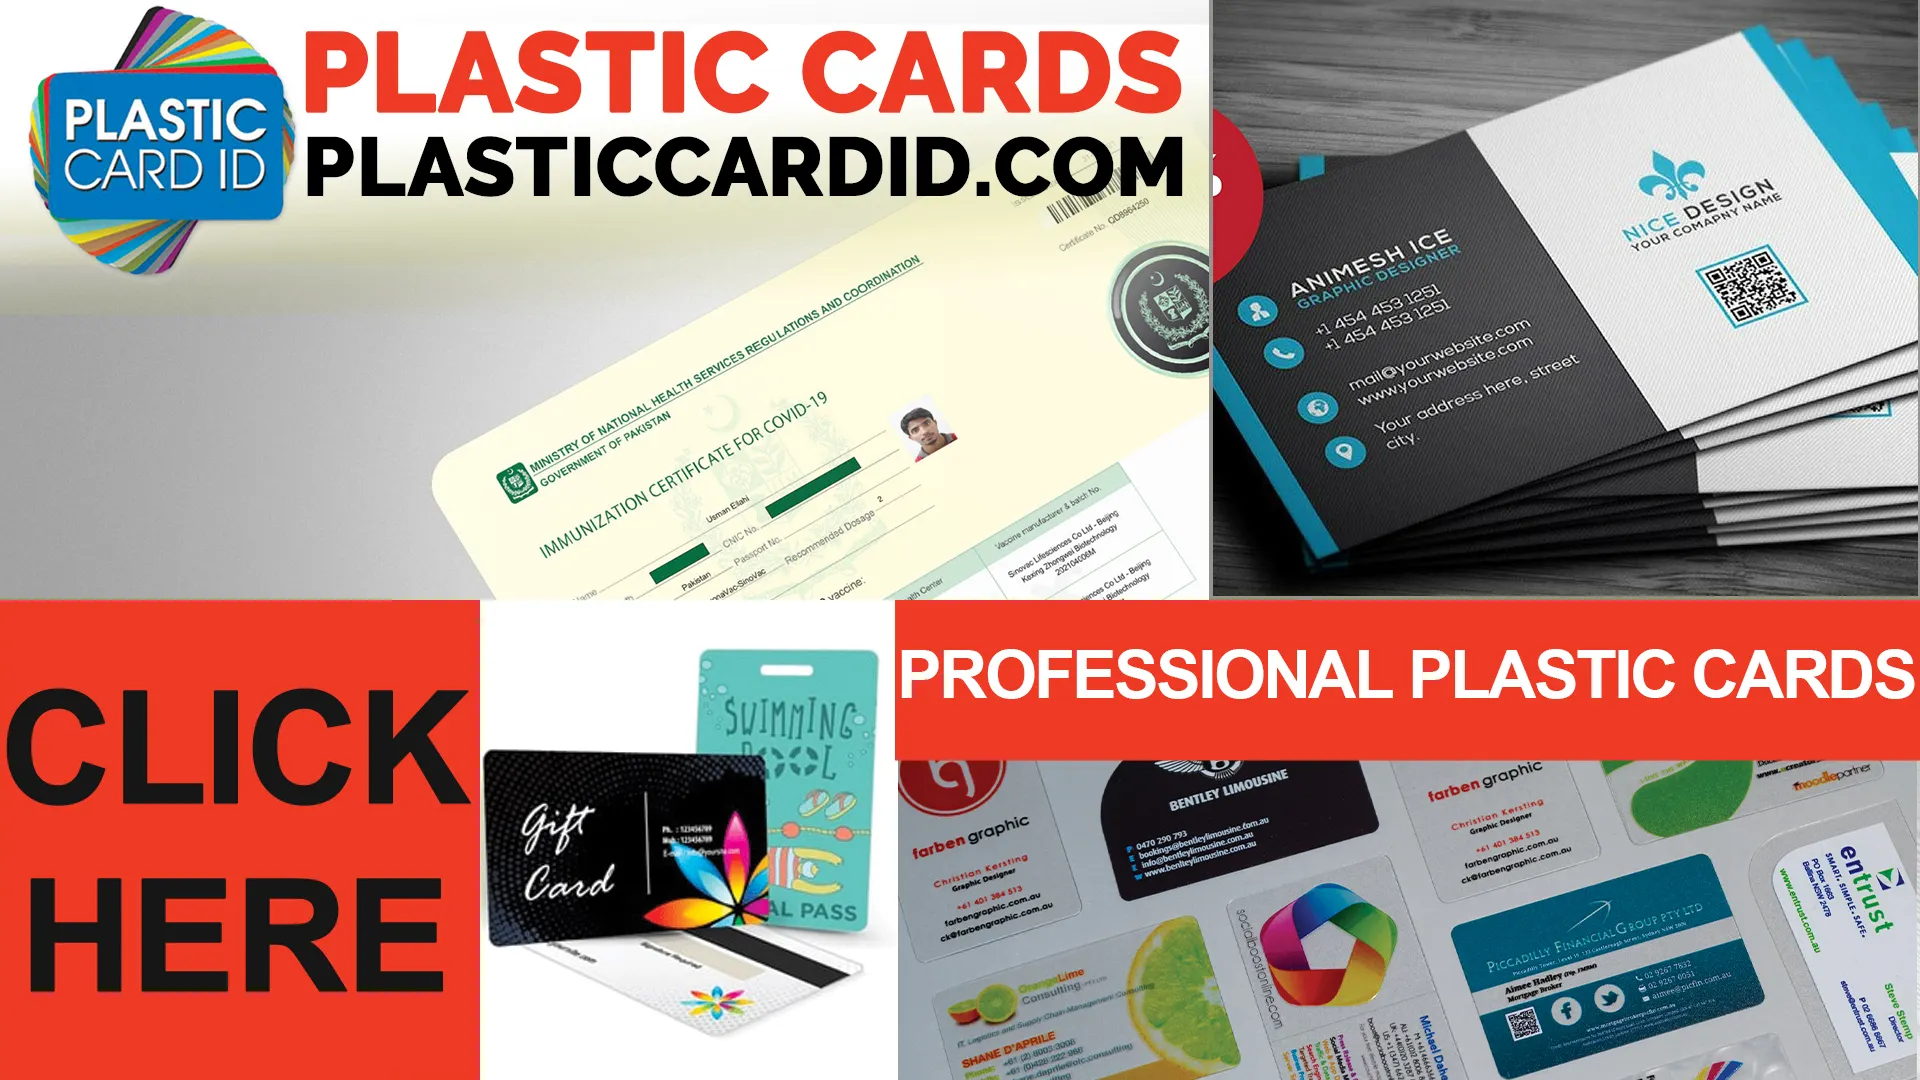 Integrating Plastic Cards into Omnichannel Marketing Strategies